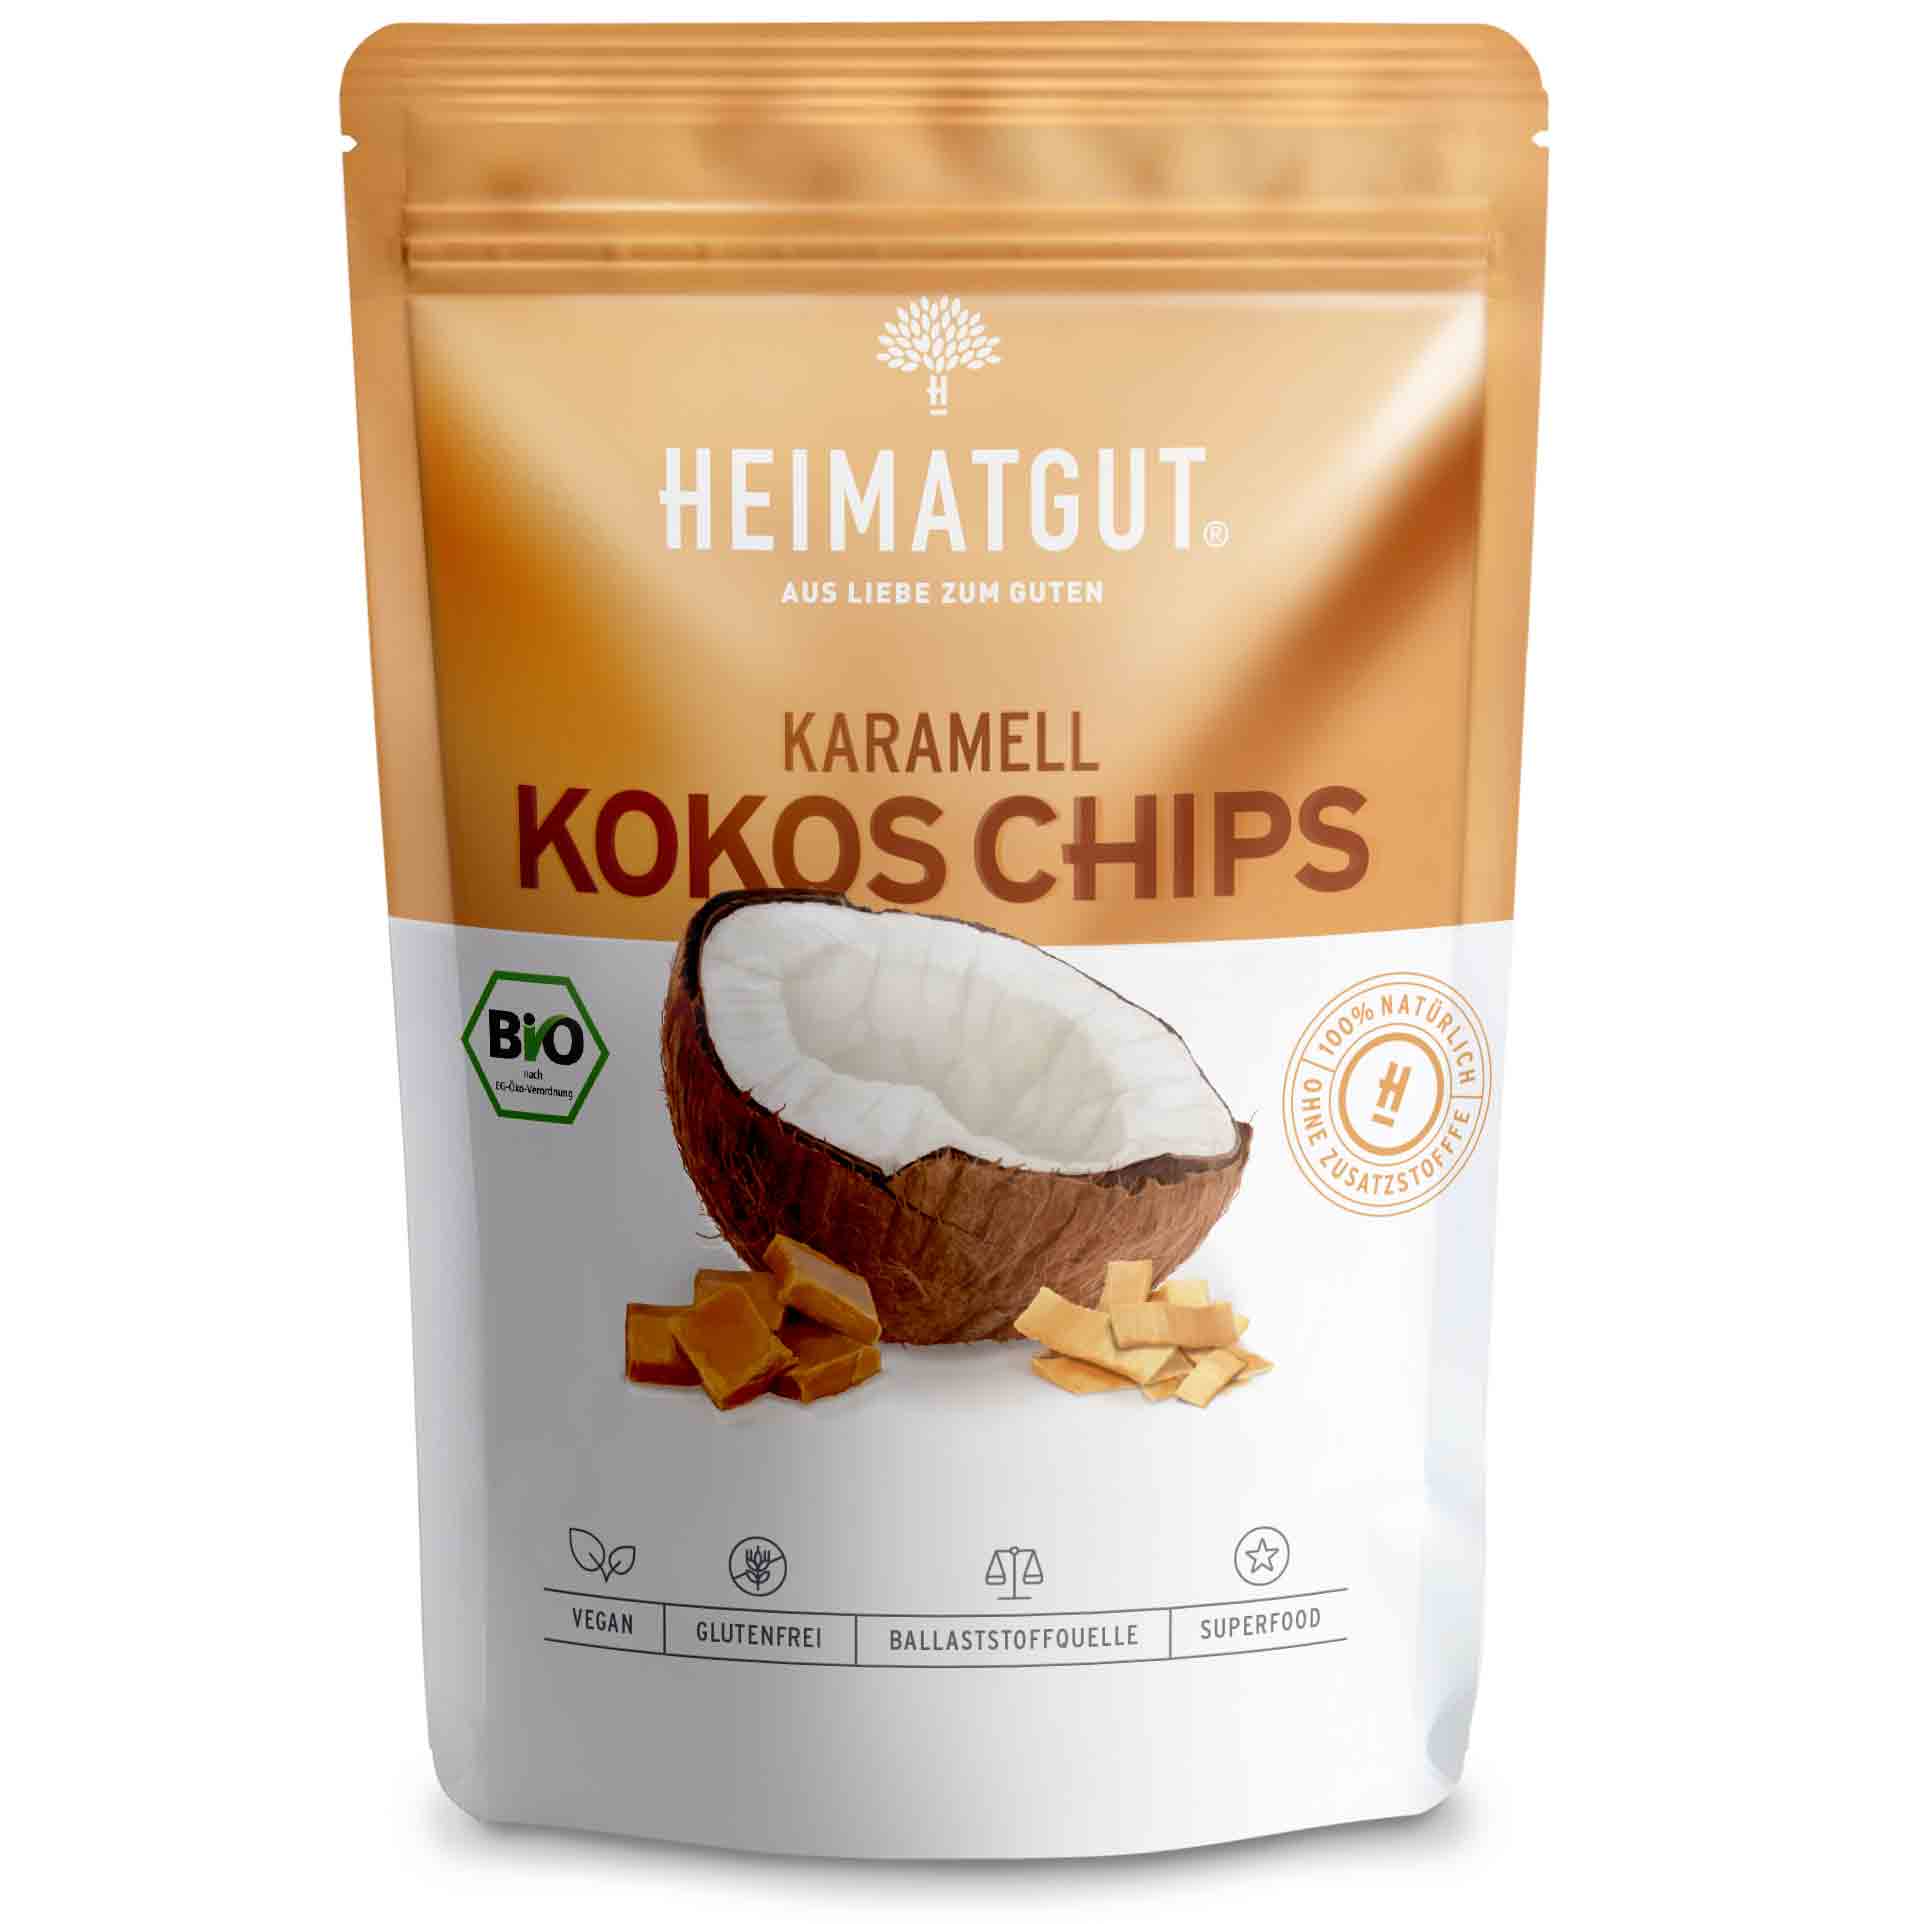 Heimatgut Kokos Chips Karamell Bio 40g | Online kaufen im World of ...